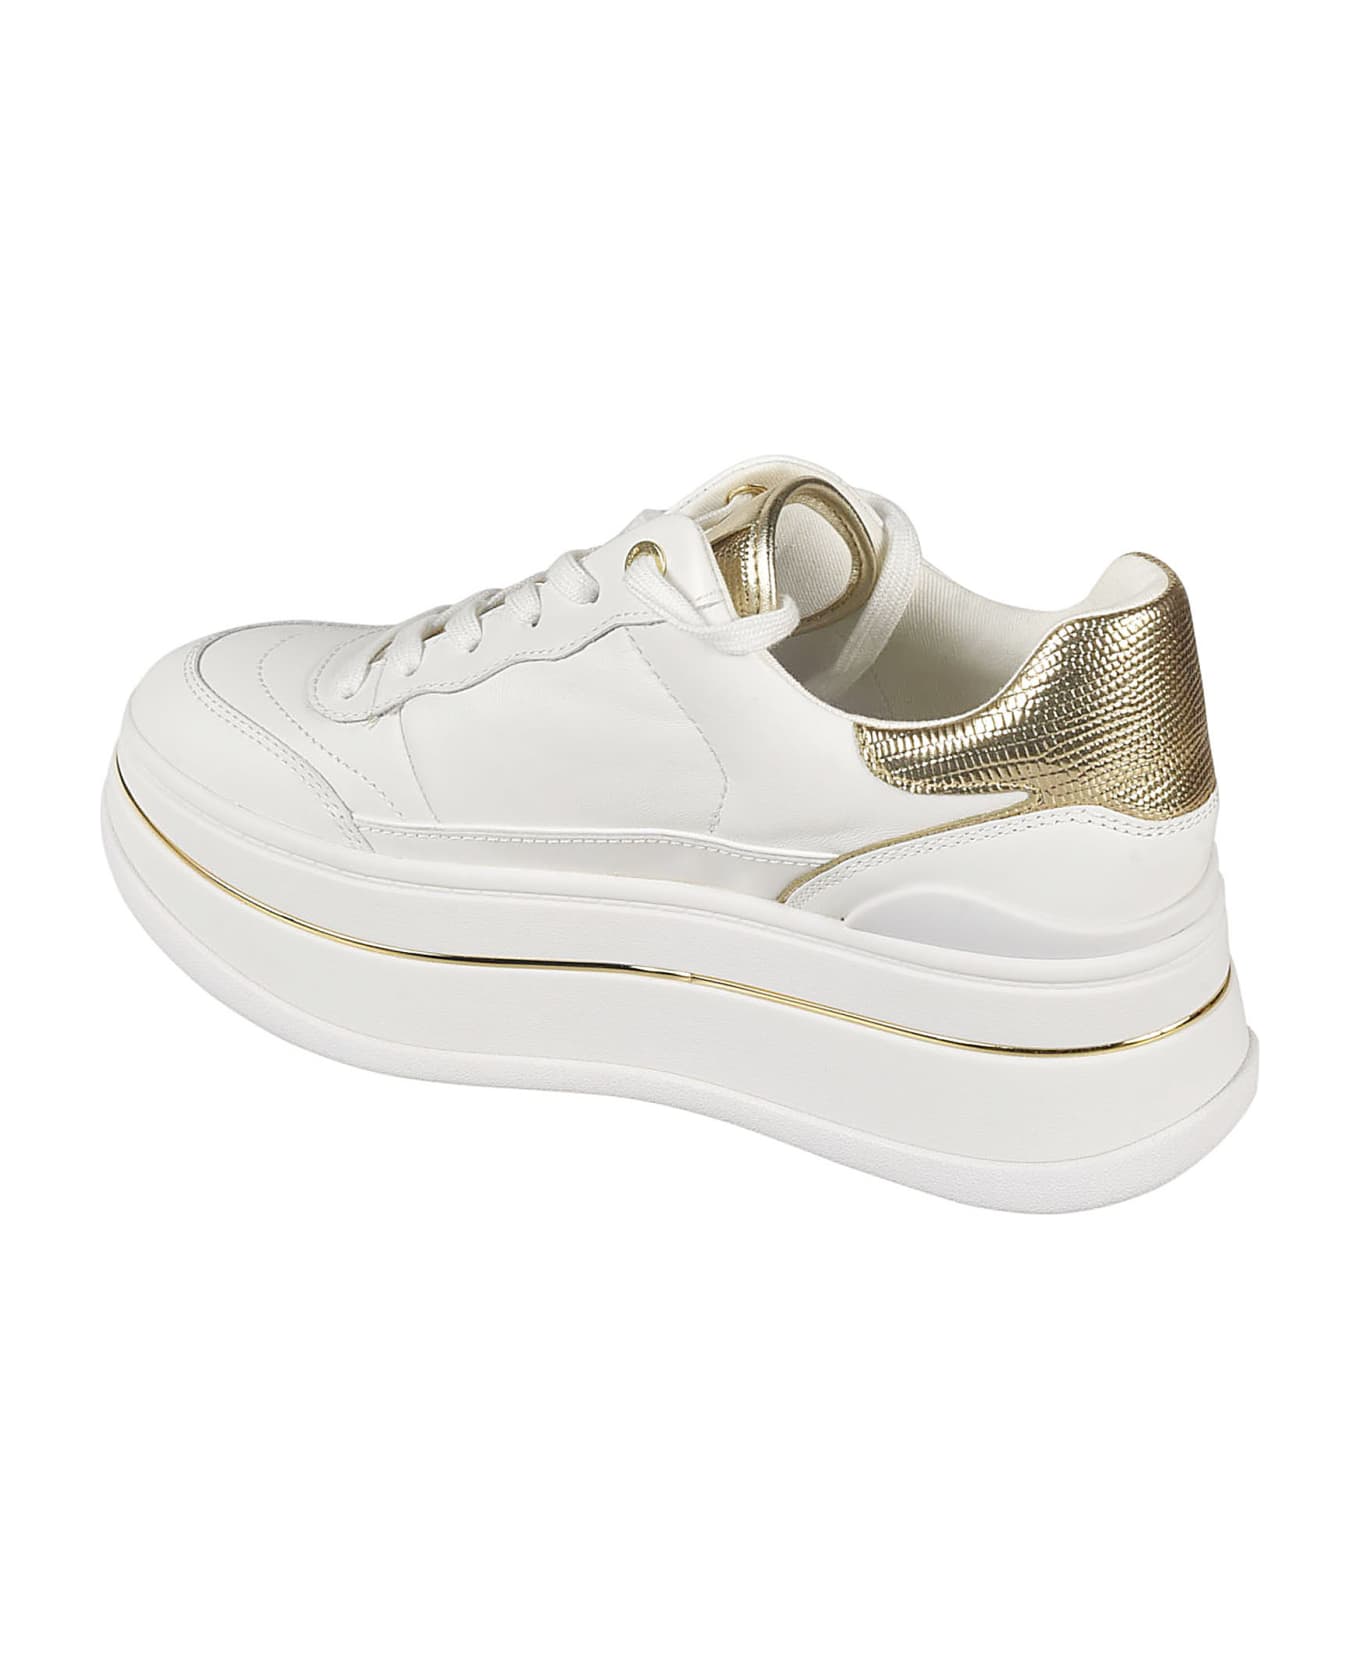 Michael Kors Platform Lace-up Sneakers - Pale Gold